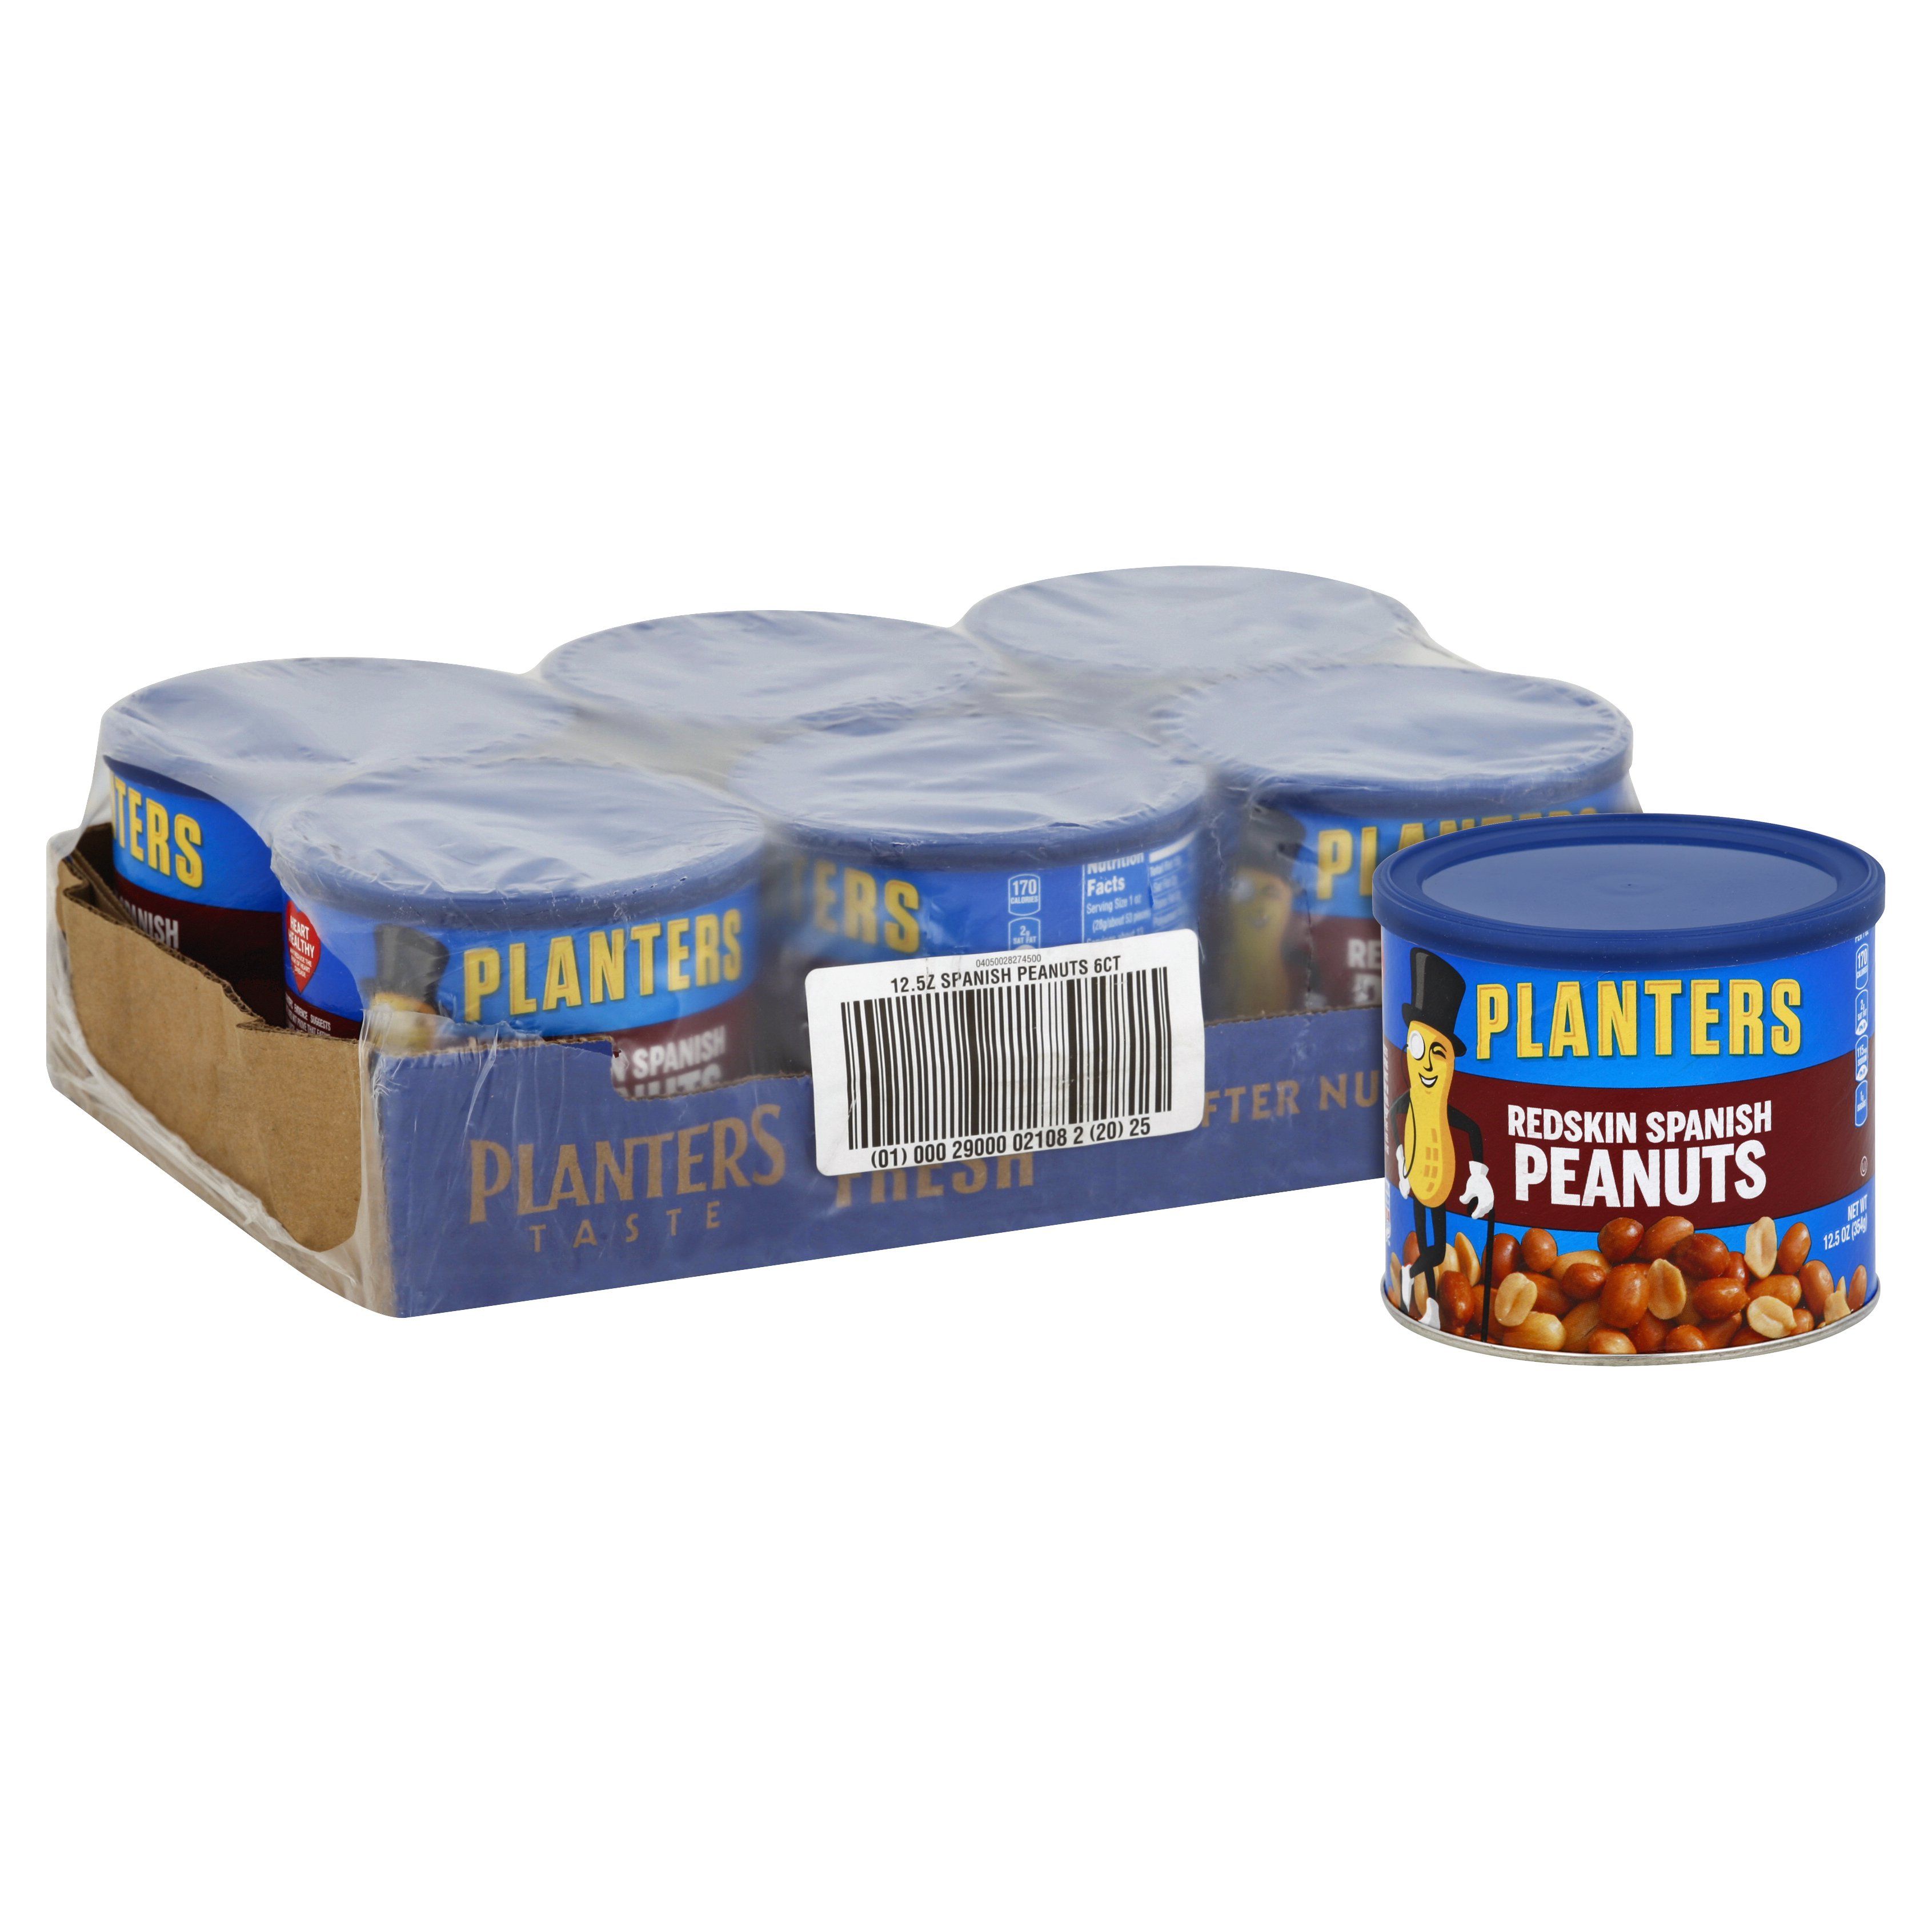 Planters Peanuts Planters Redskin Spanish 12.5 Oz-6 Count 